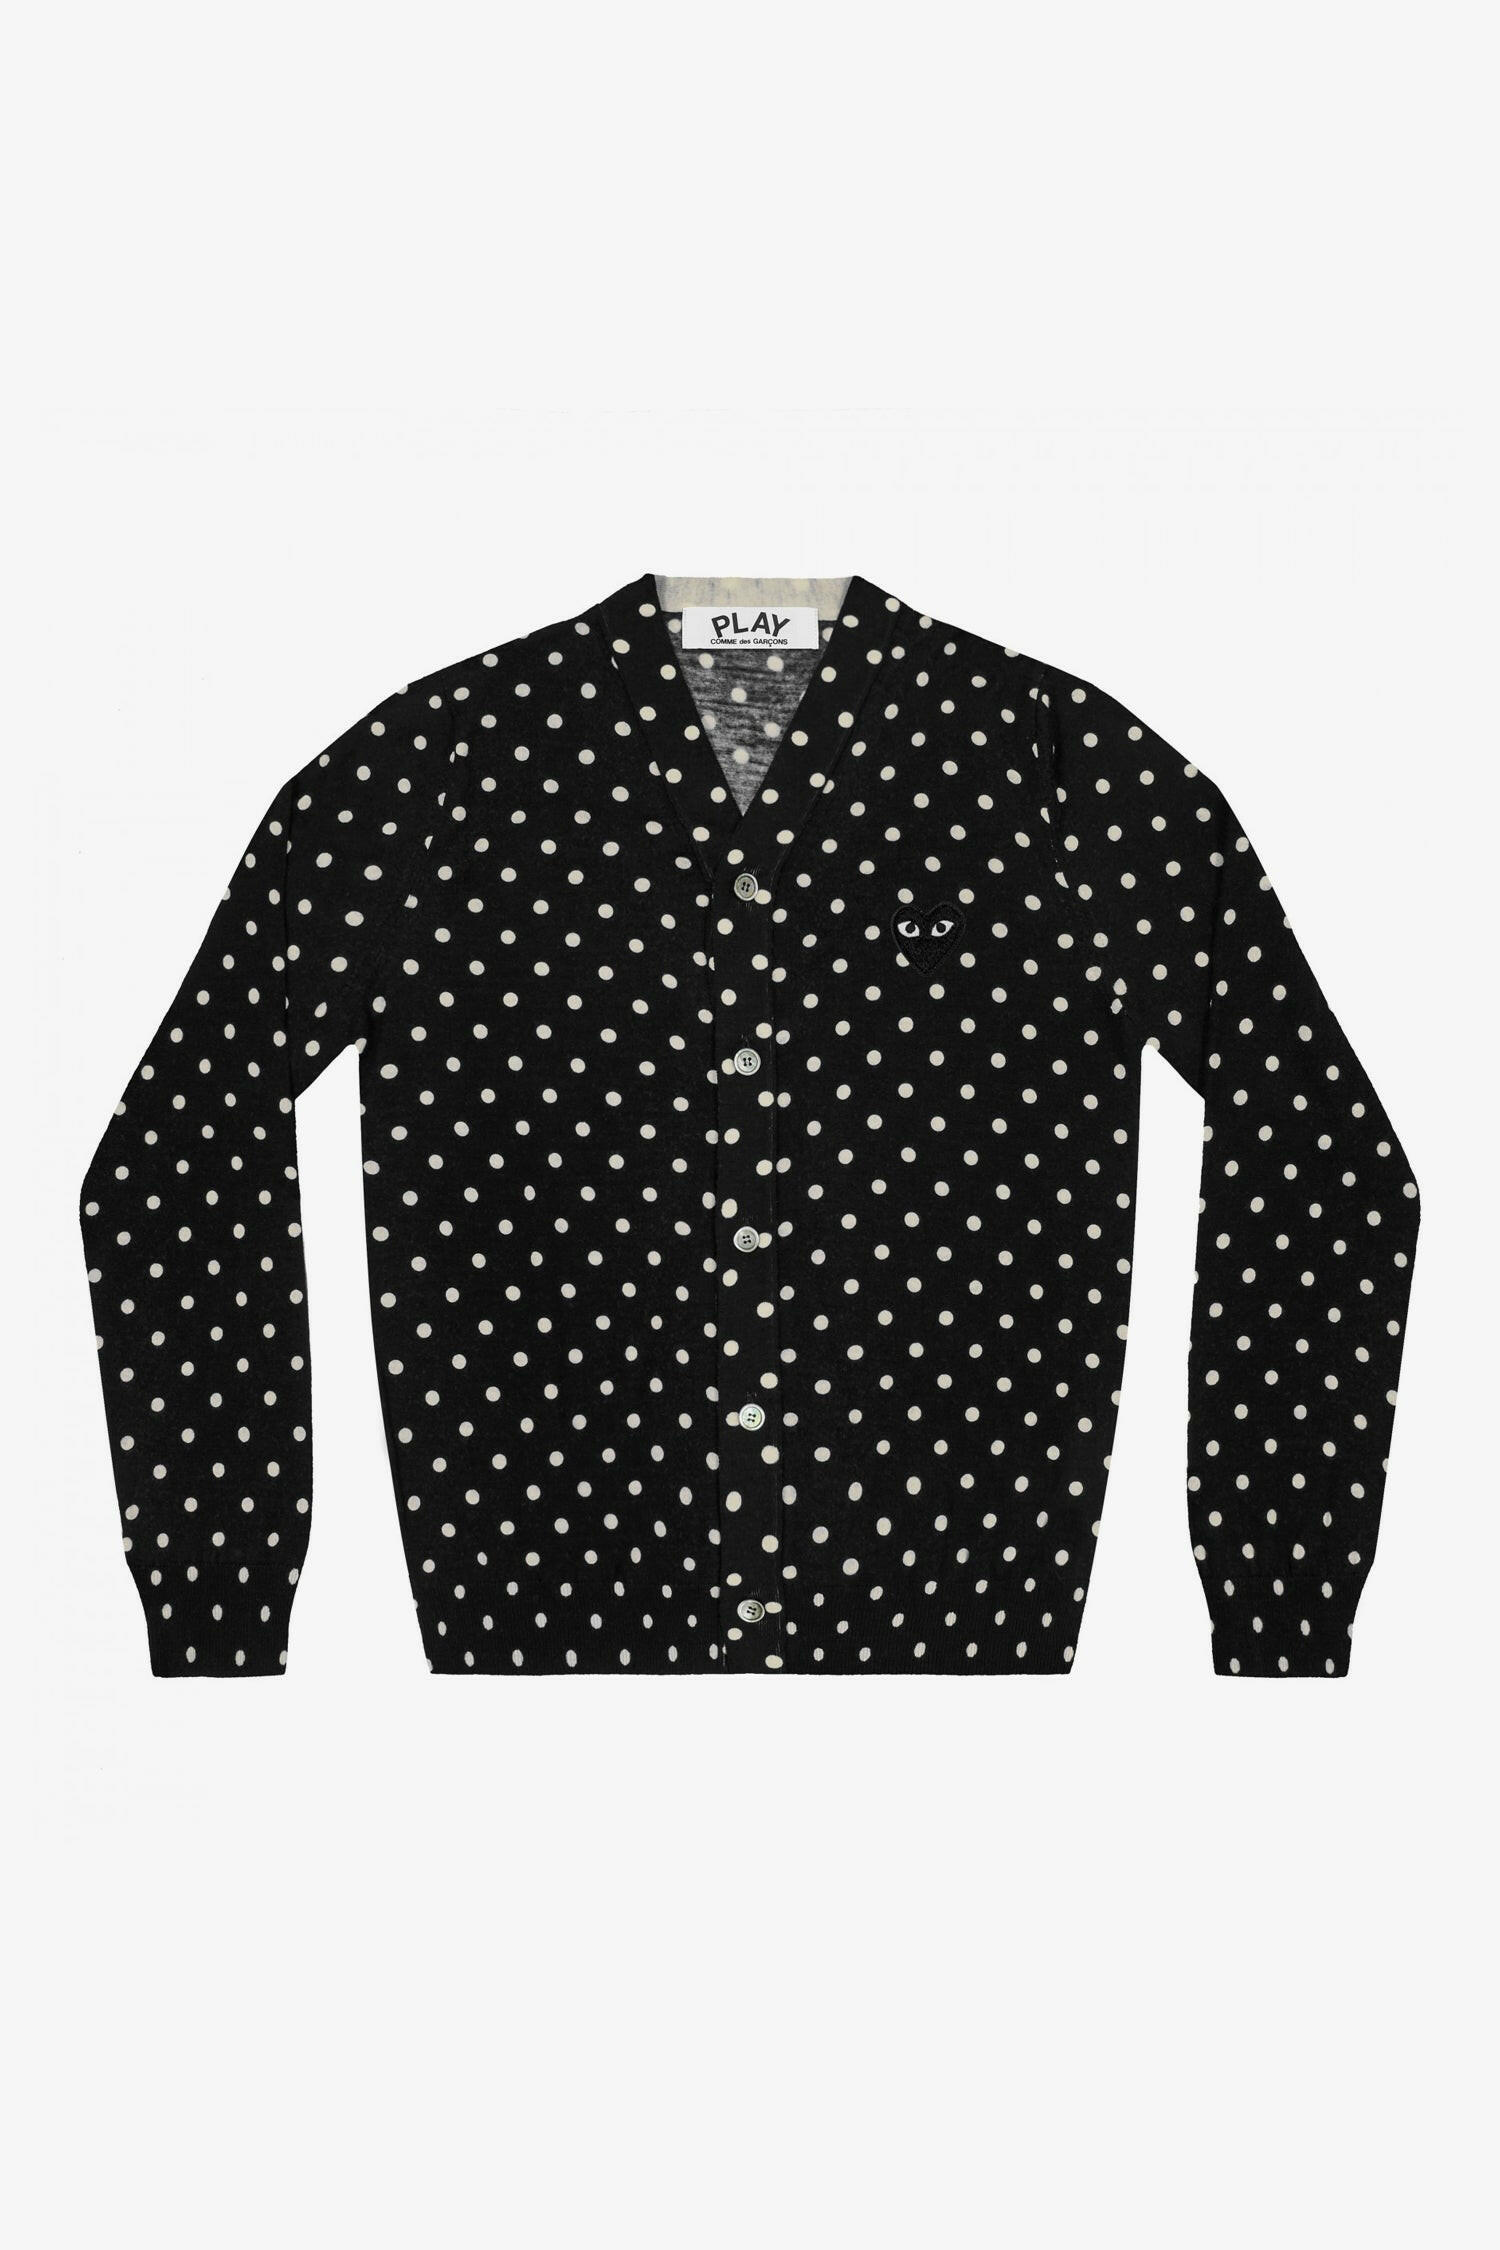 Selectshop FRAME - COMME DES GARCONS PLAY Polka Dot Cardigan Black Heart Outerwear Dubai